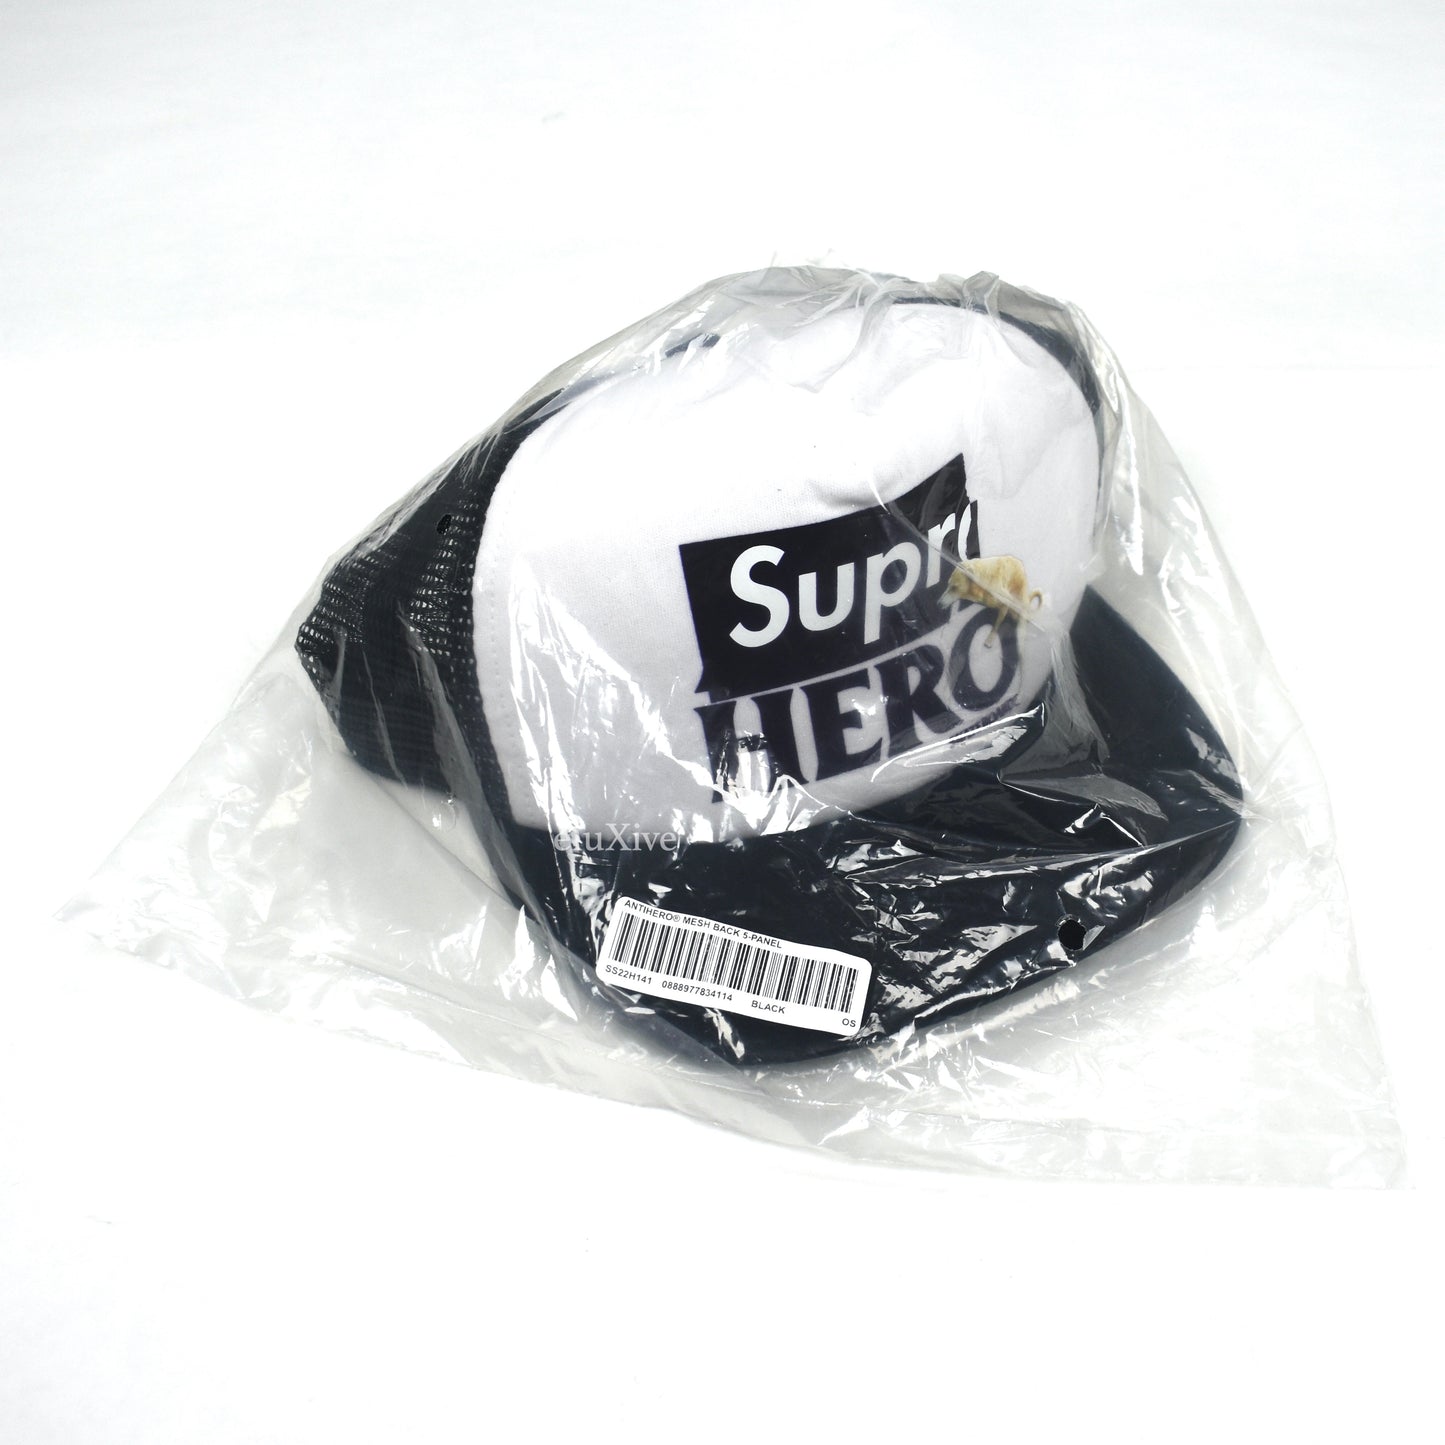 Supreme x Antihero - Black Box Logo Dog Trucker Hat